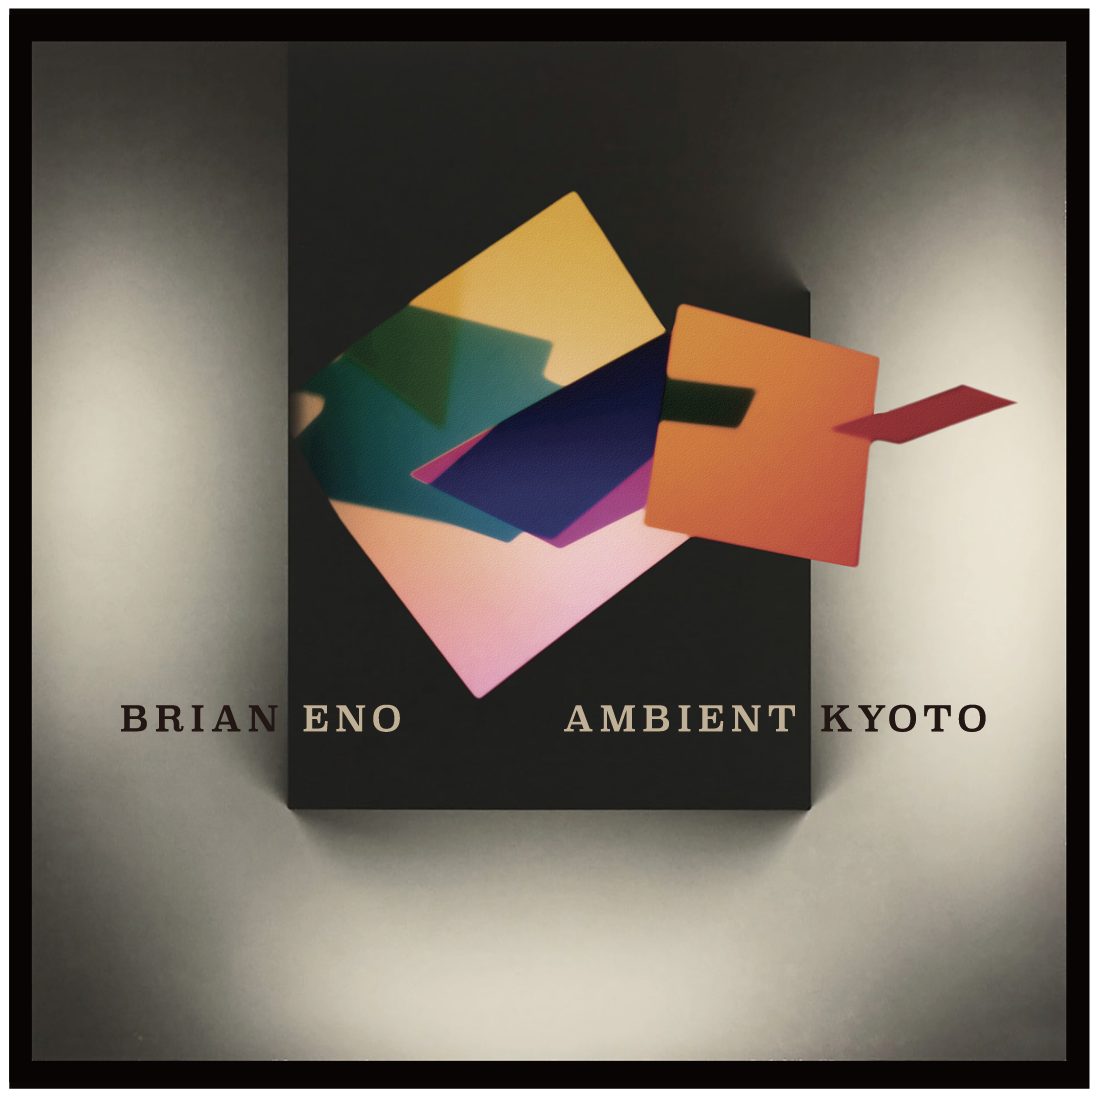 BRIAN ENO AMBIENT KYOTO」 （京都中央信用金庫 旧厚生センター 